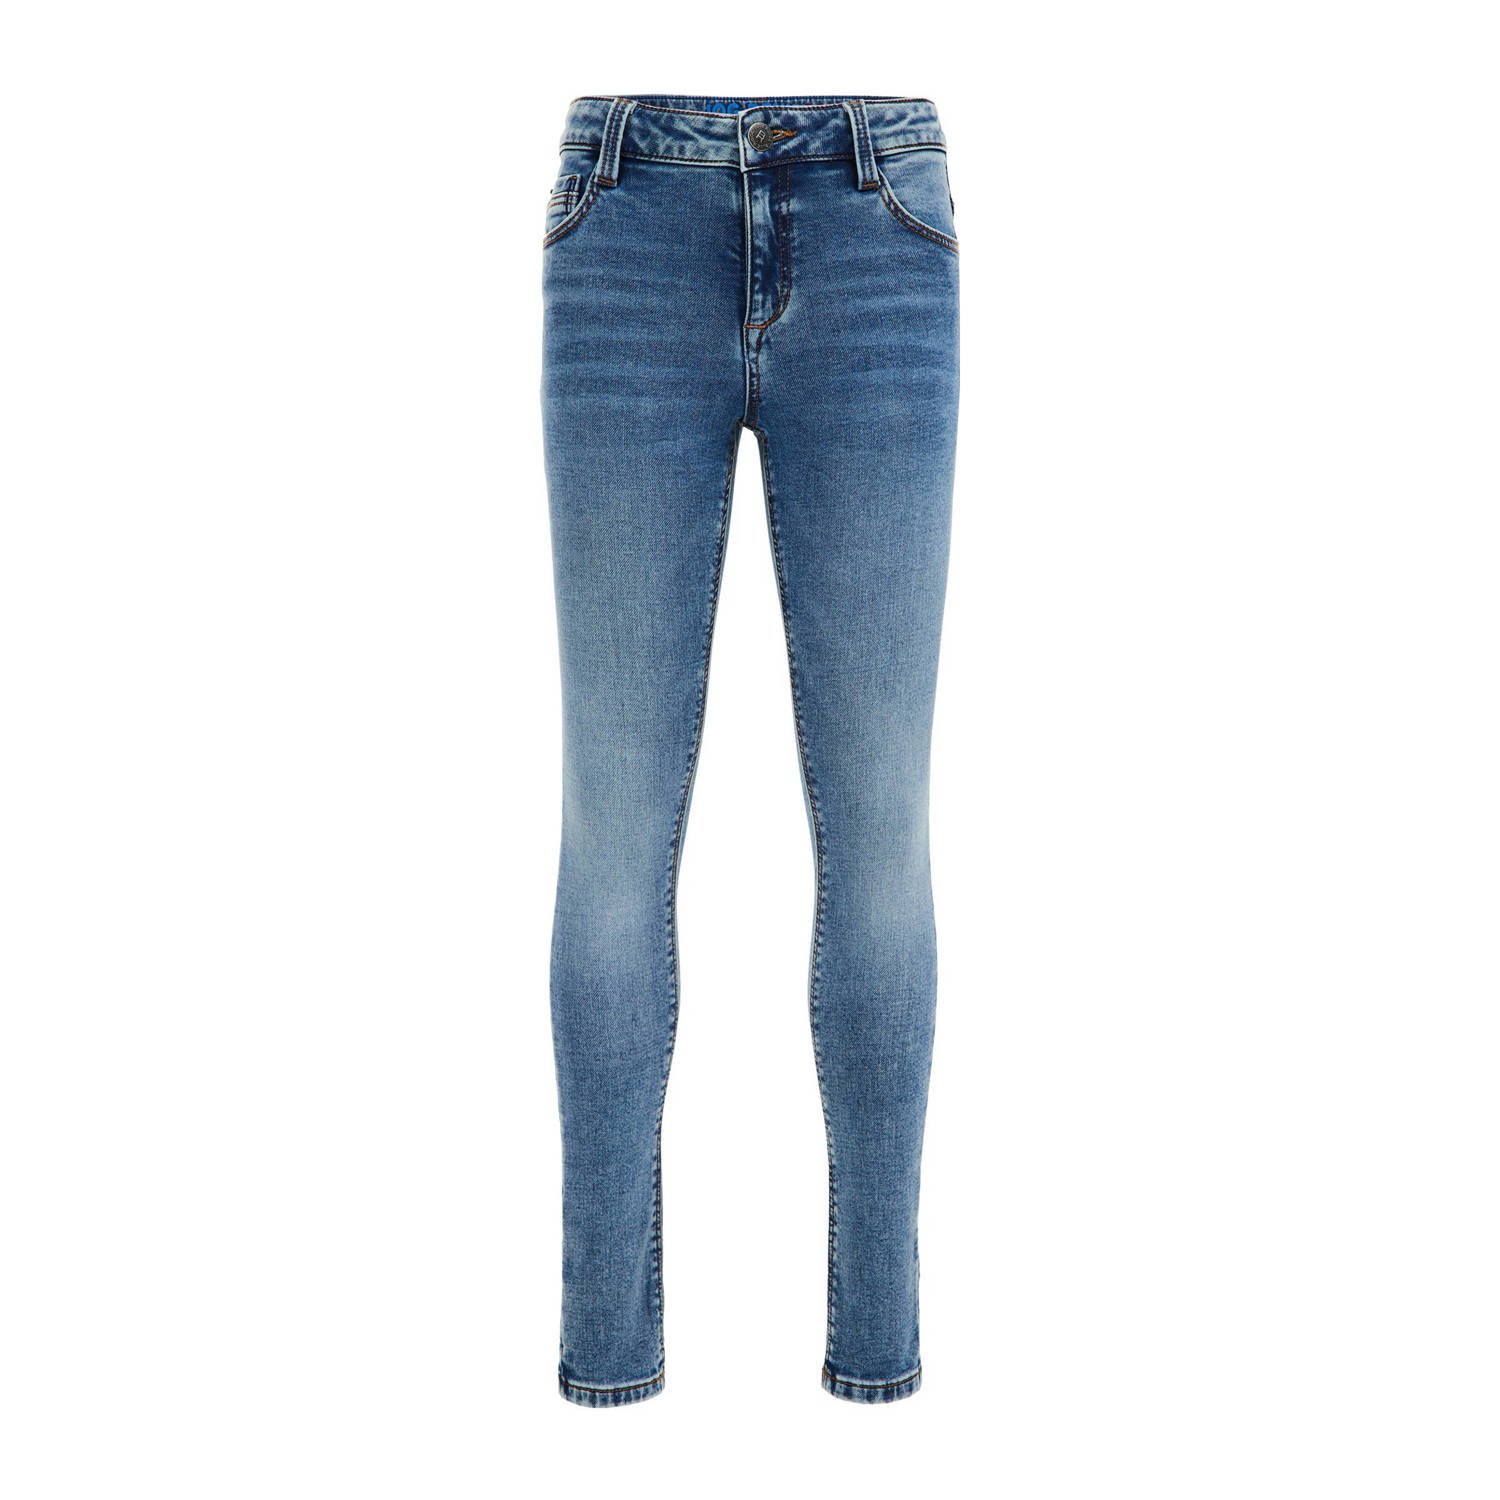 WE Fashion Blue Ridge skinny jeans marbled blue denim Blauw Jongens Stretchdenim 104